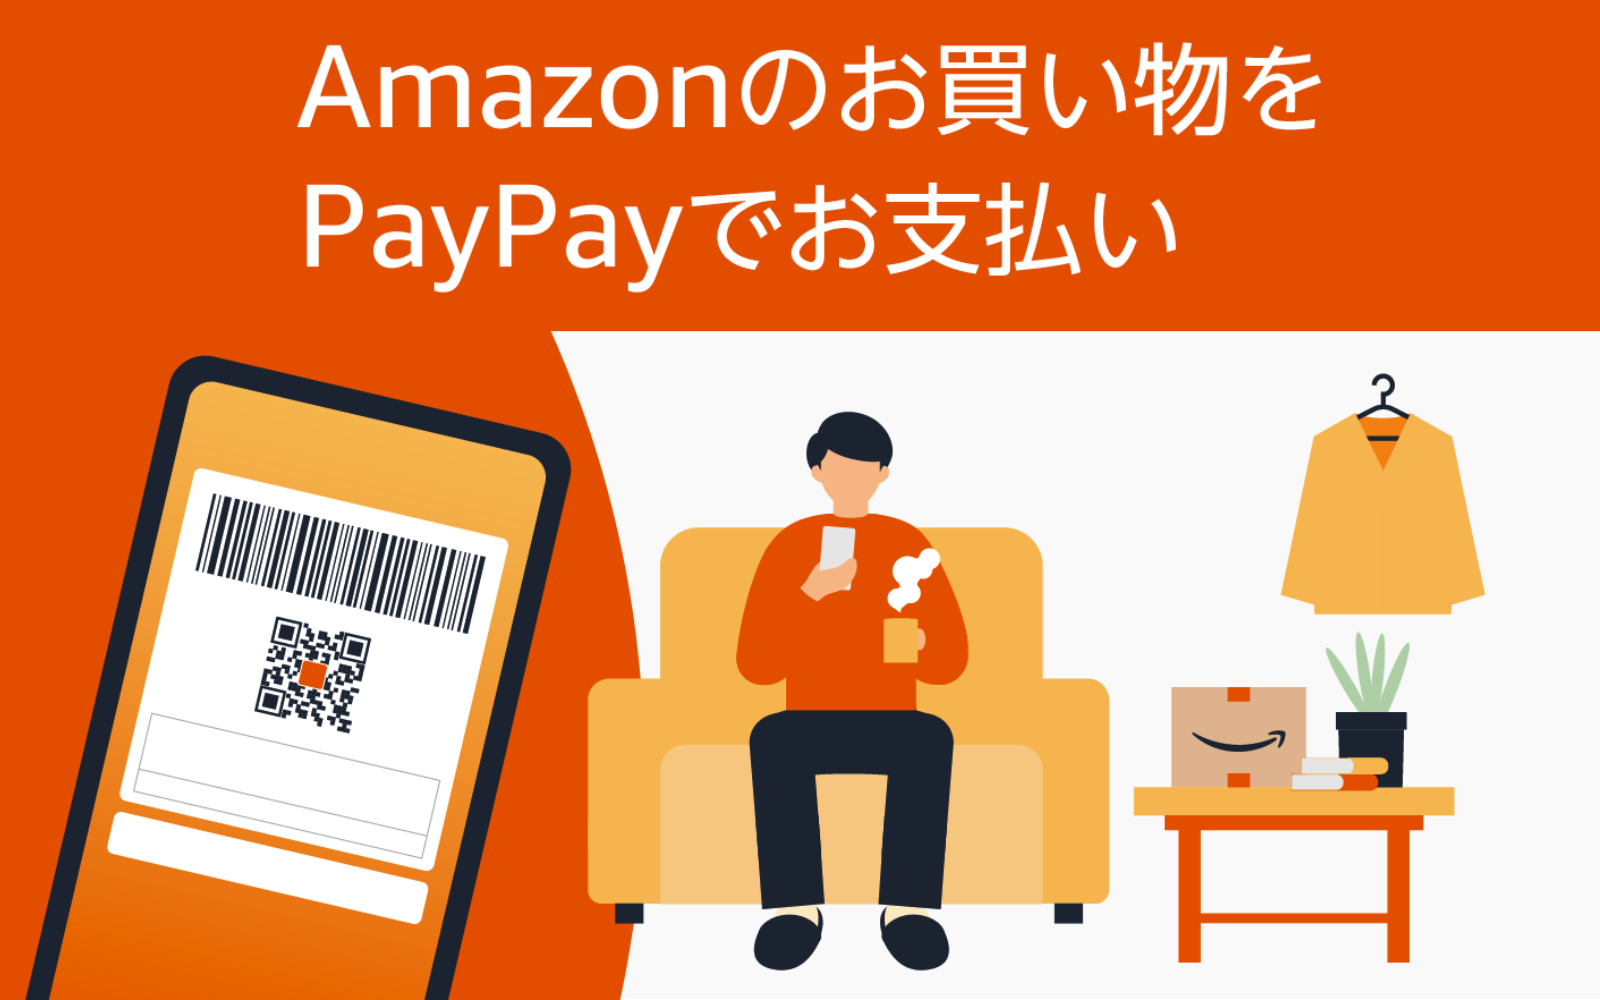 Amazon-PayPay.jpg